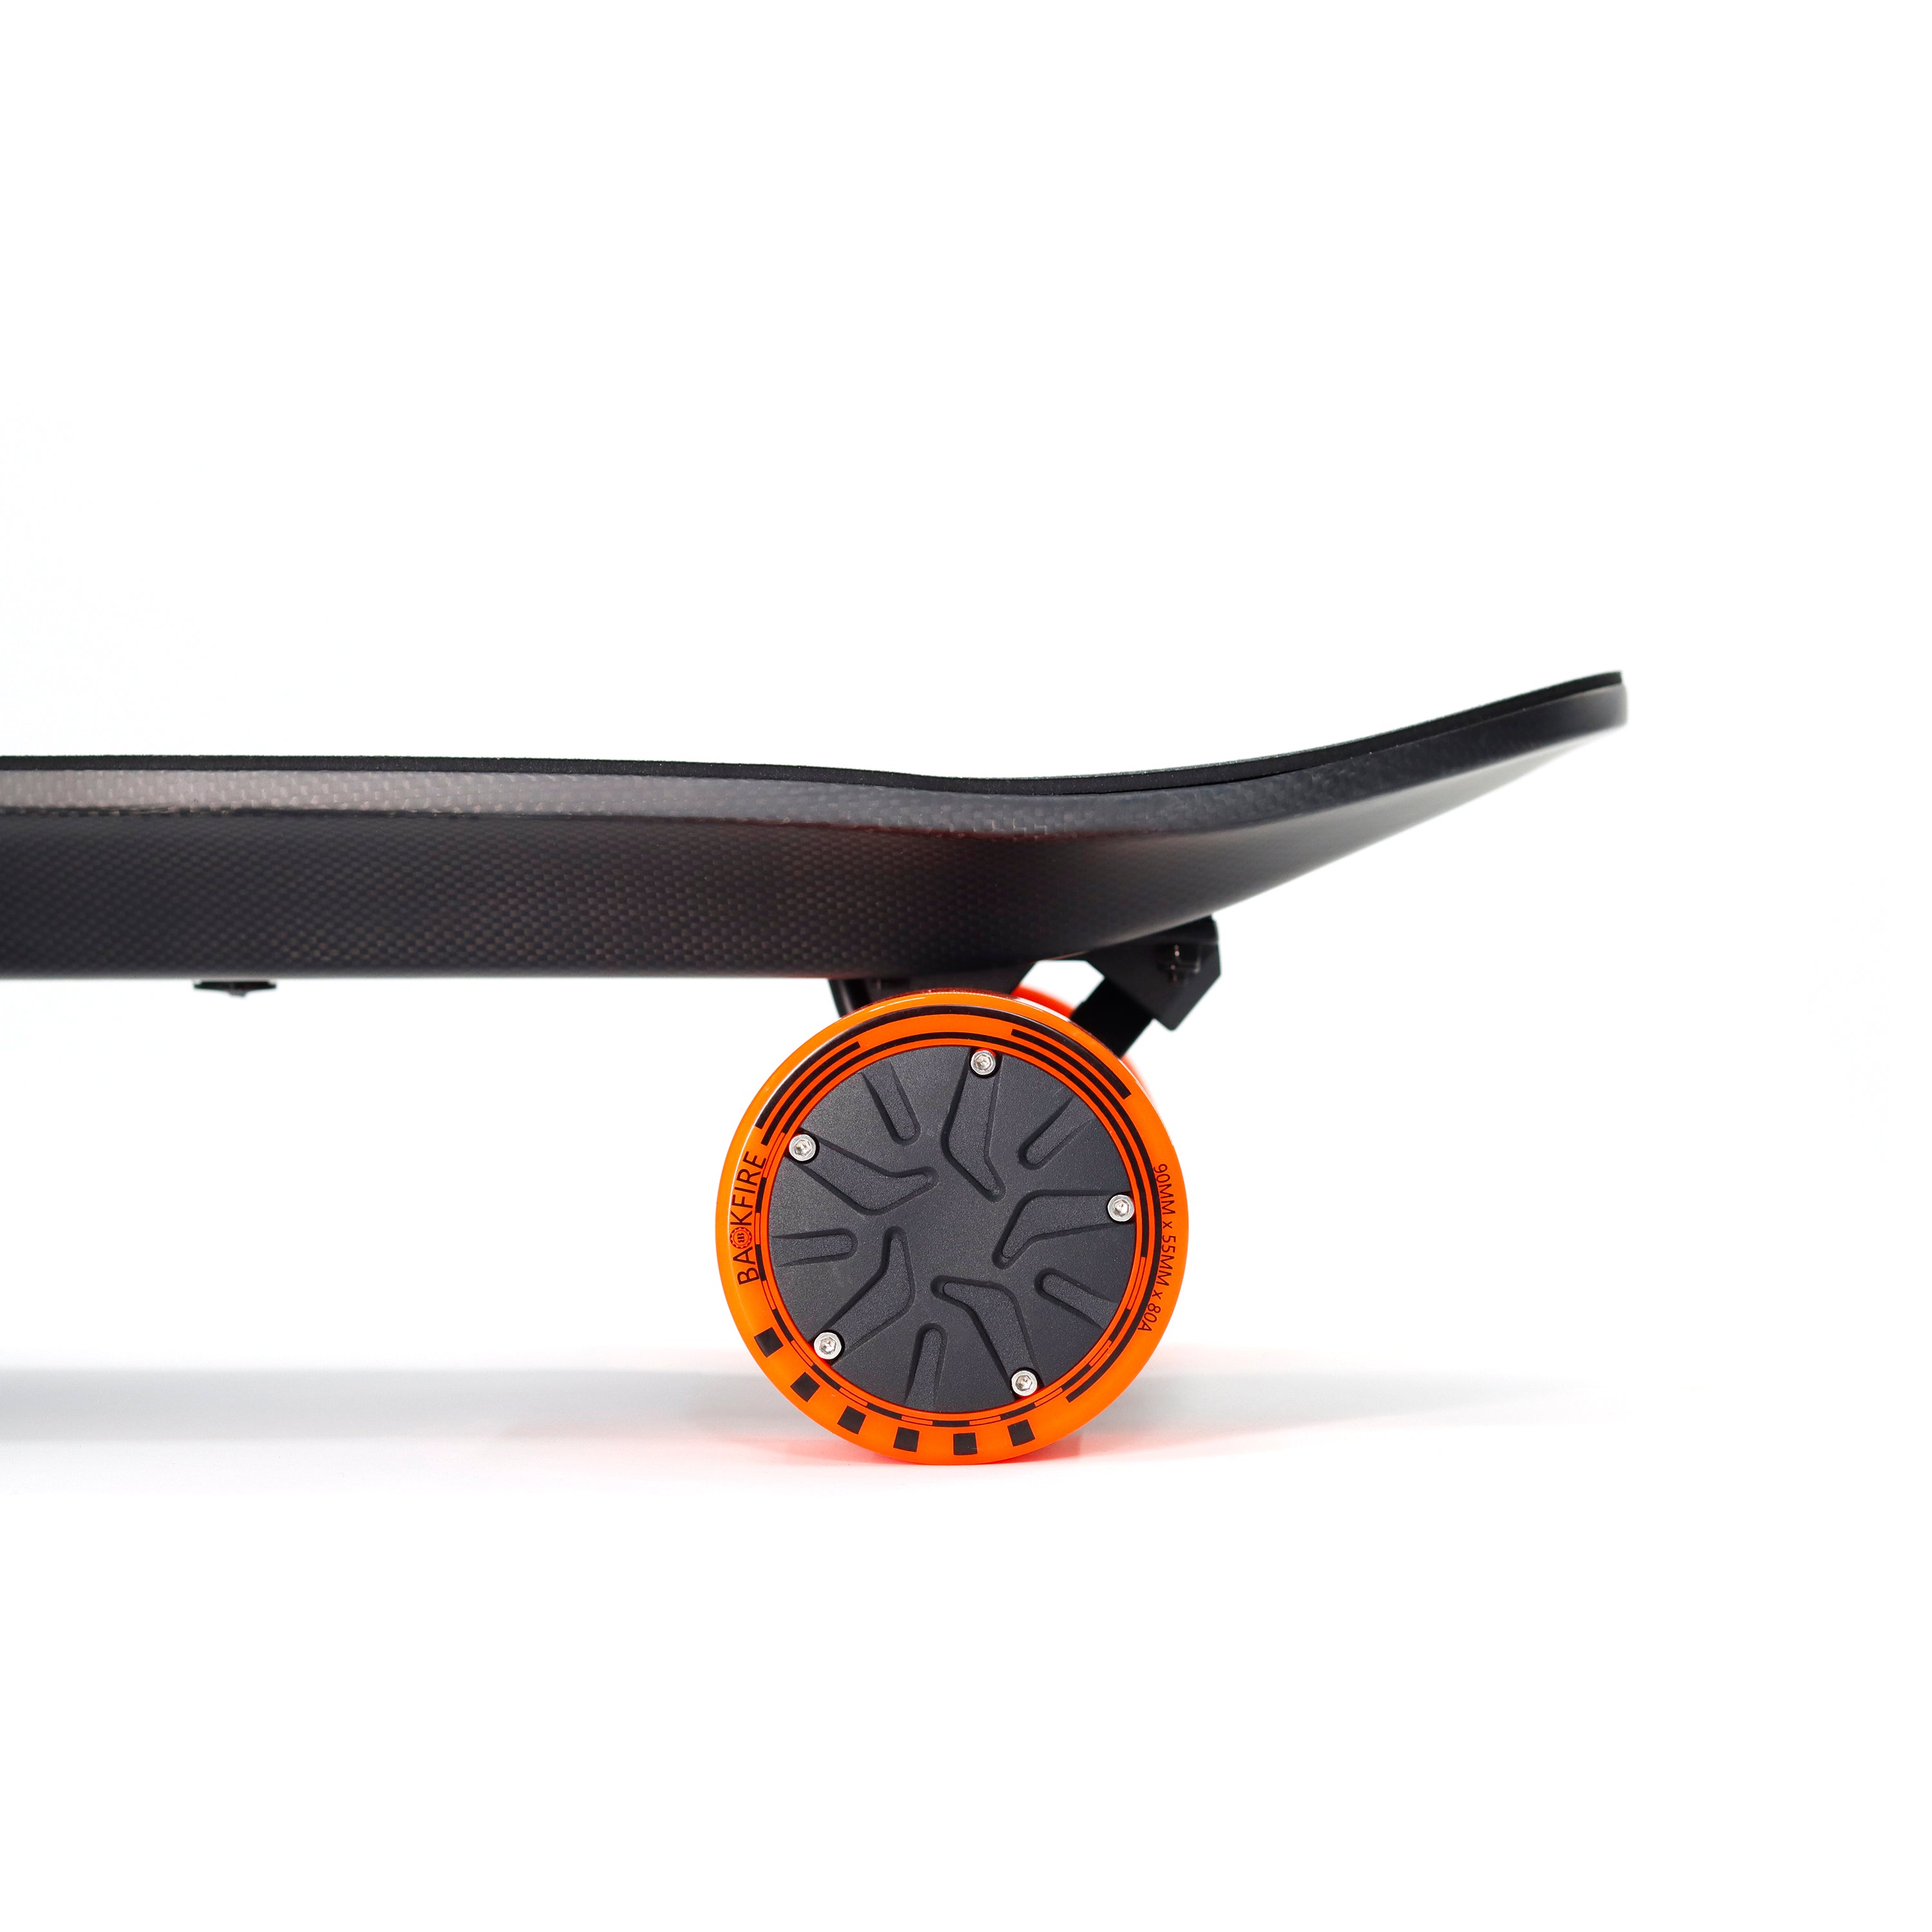 Backfire Mini Super Portable Electric Skateboard Best for City Commute